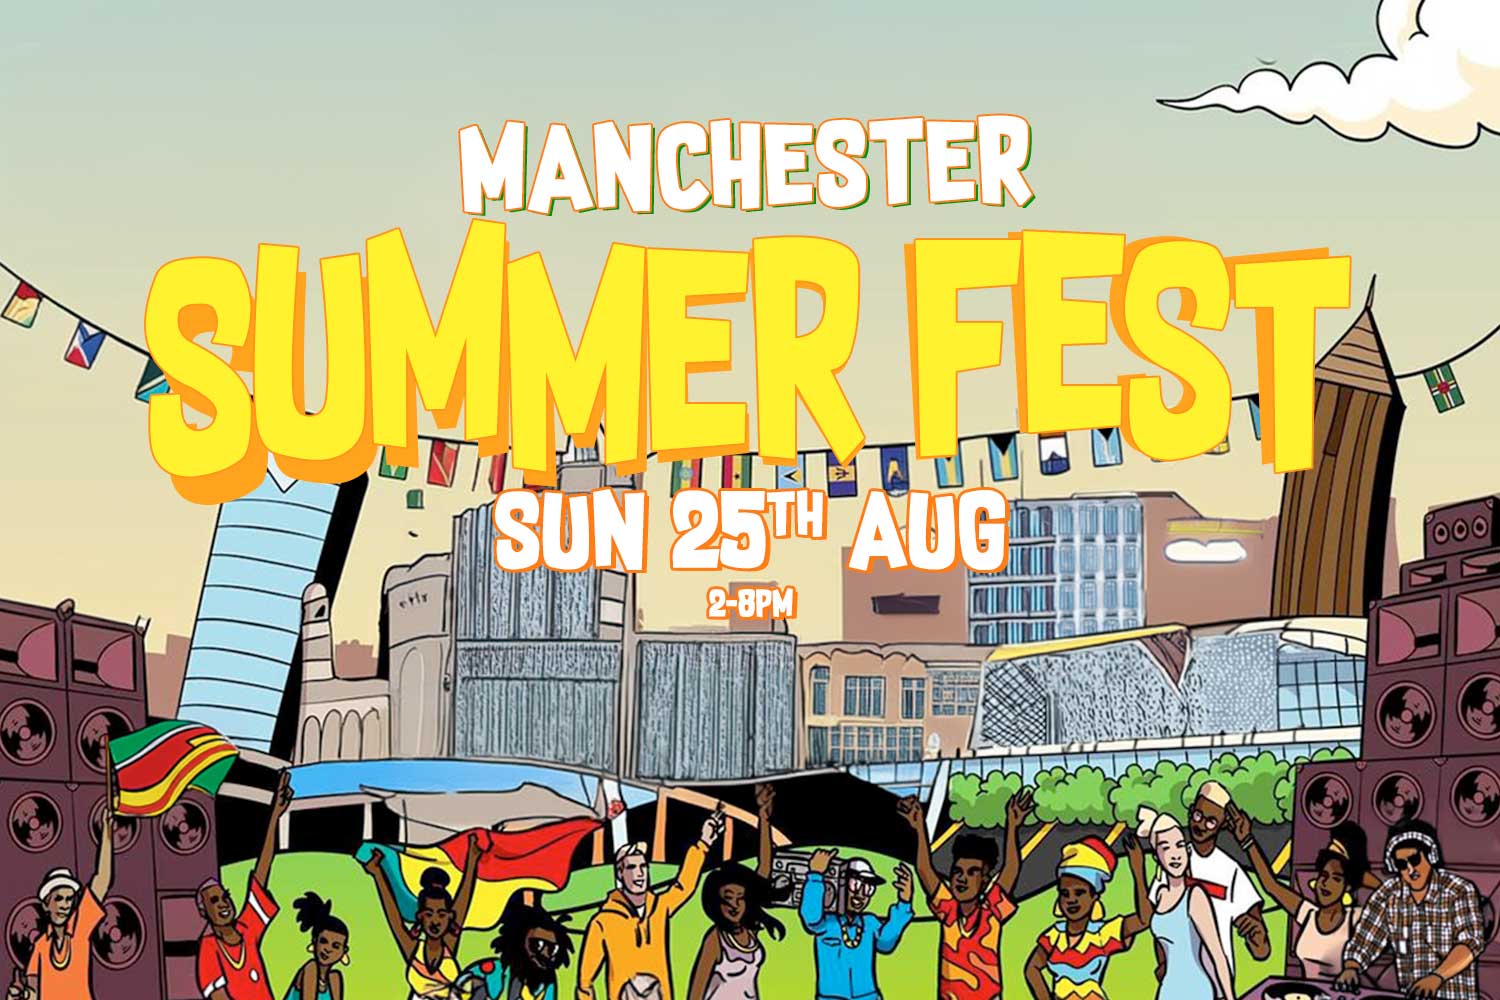 Sun, 25th Aug | Summer Fest